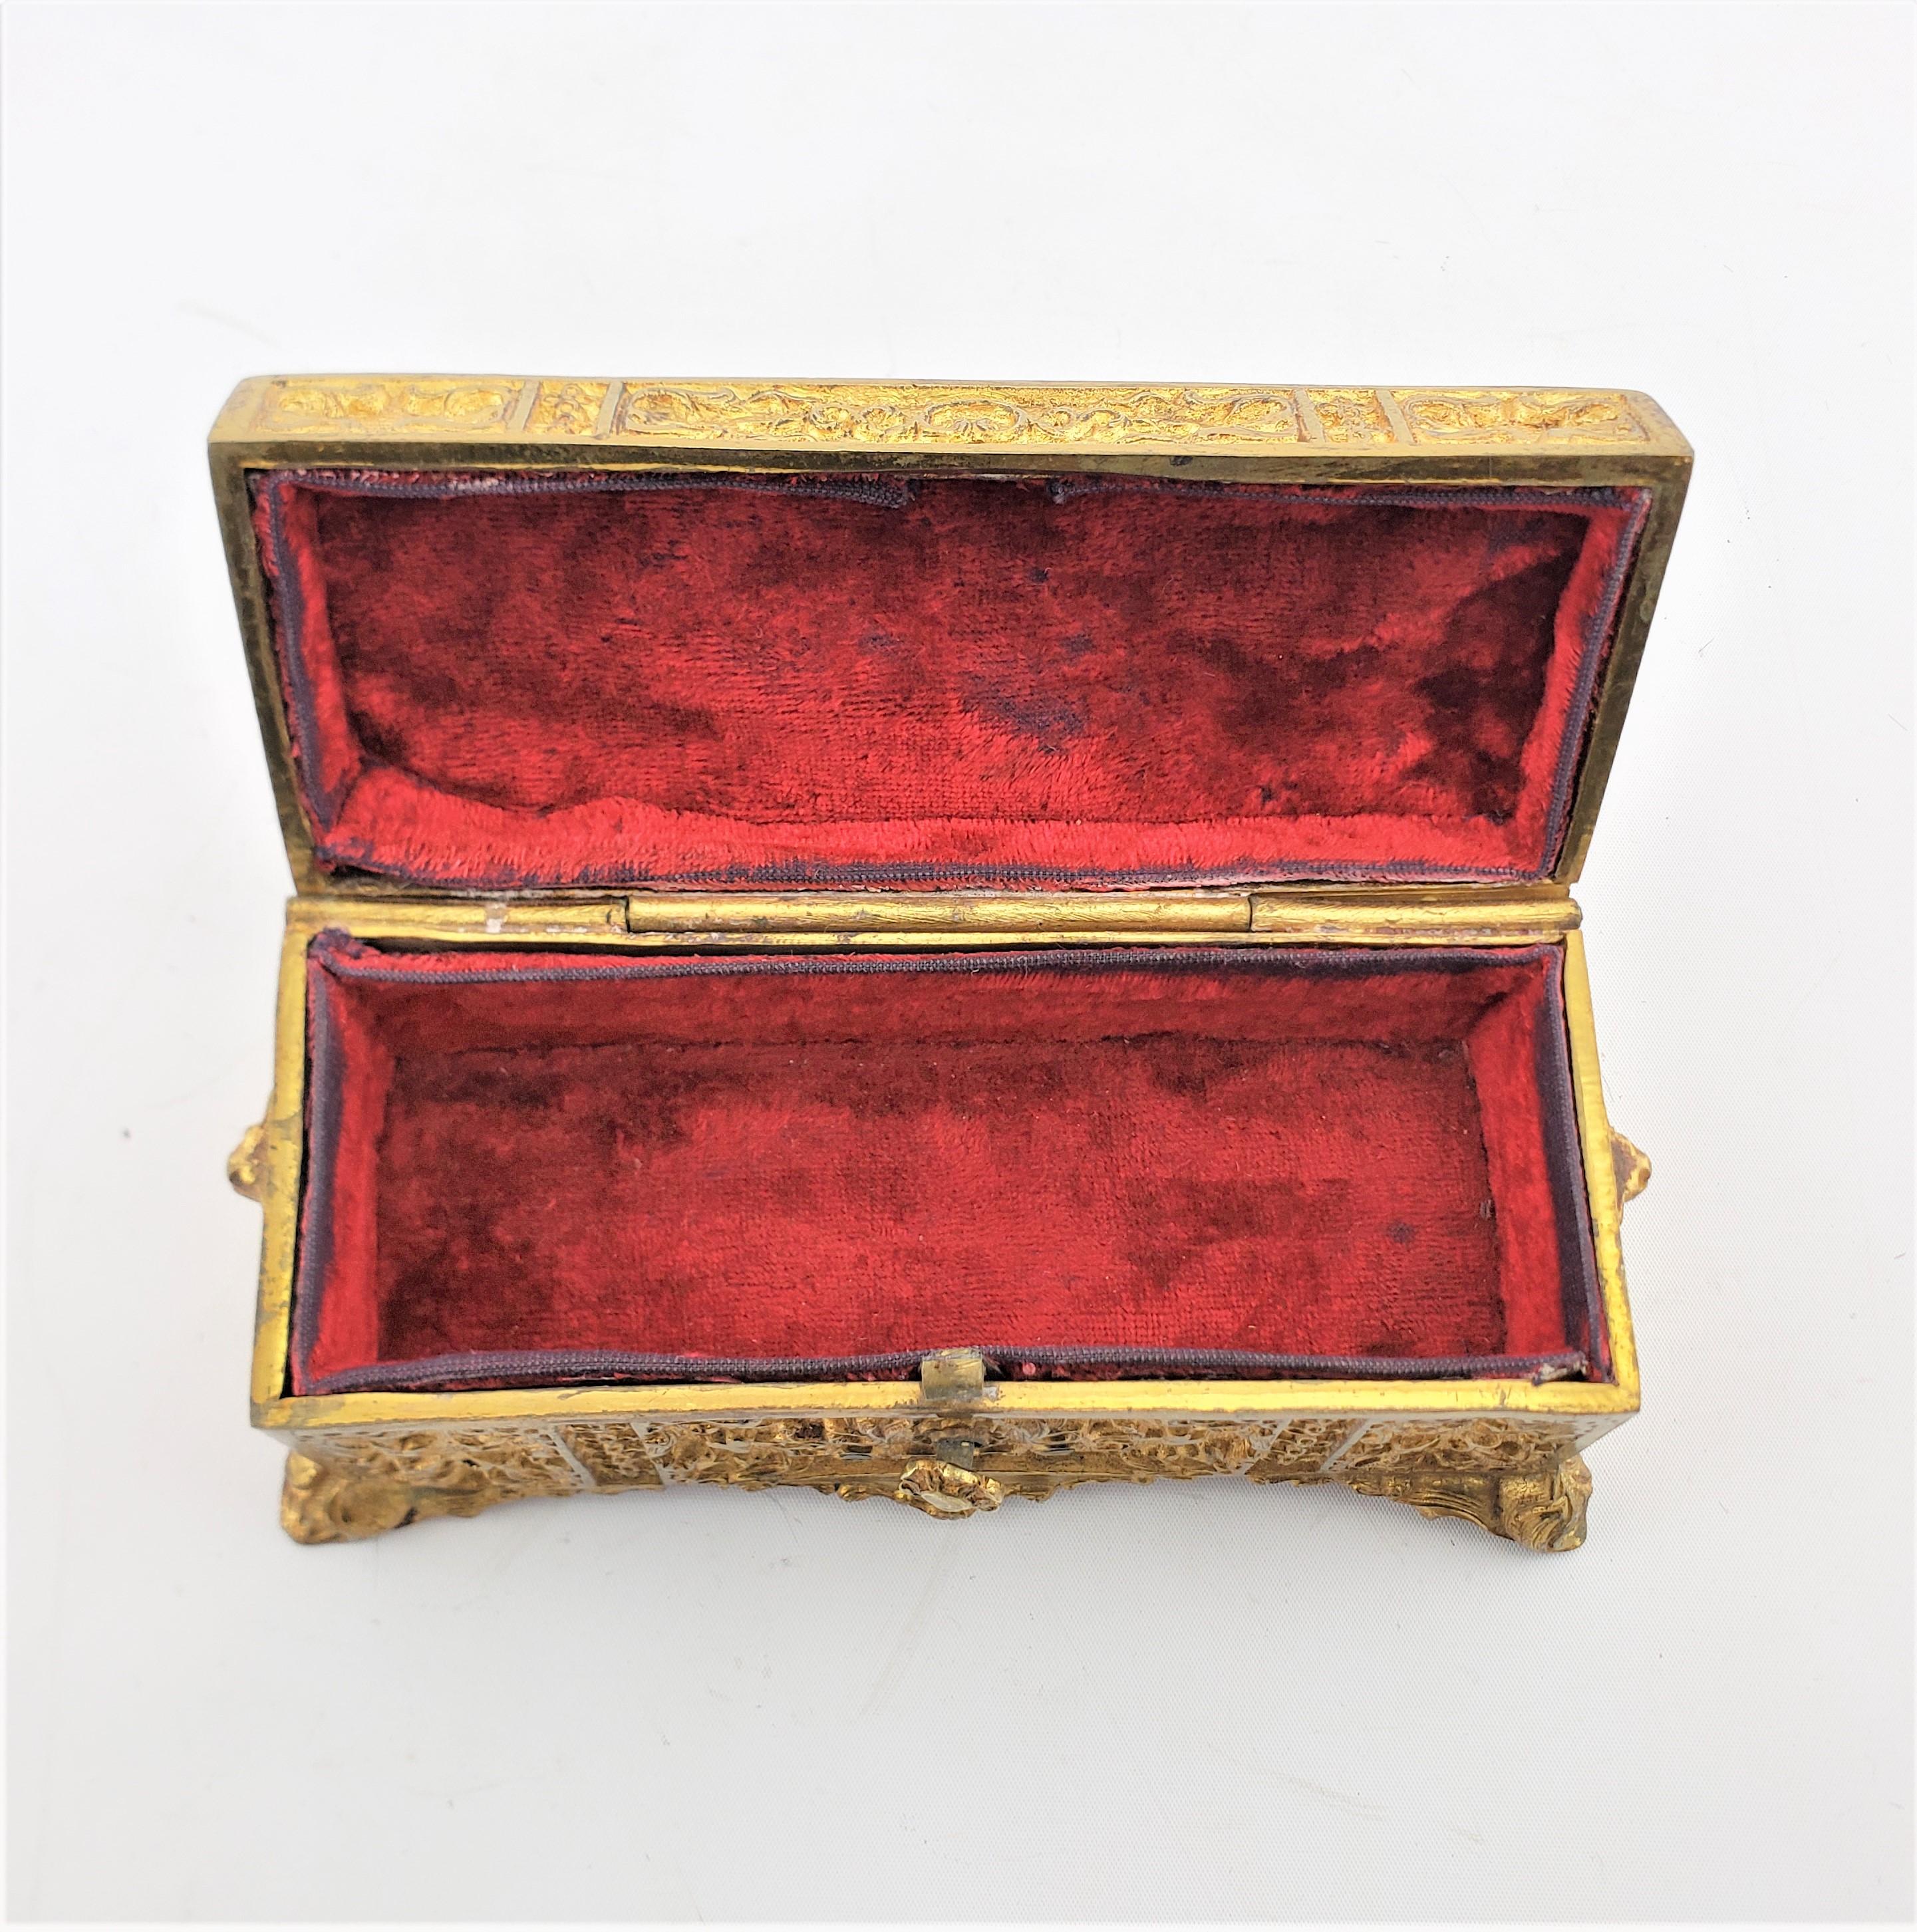 Antique Gilt Bronze Decorative Jewelry Box or Casket with Floral Decoration For Sale 1